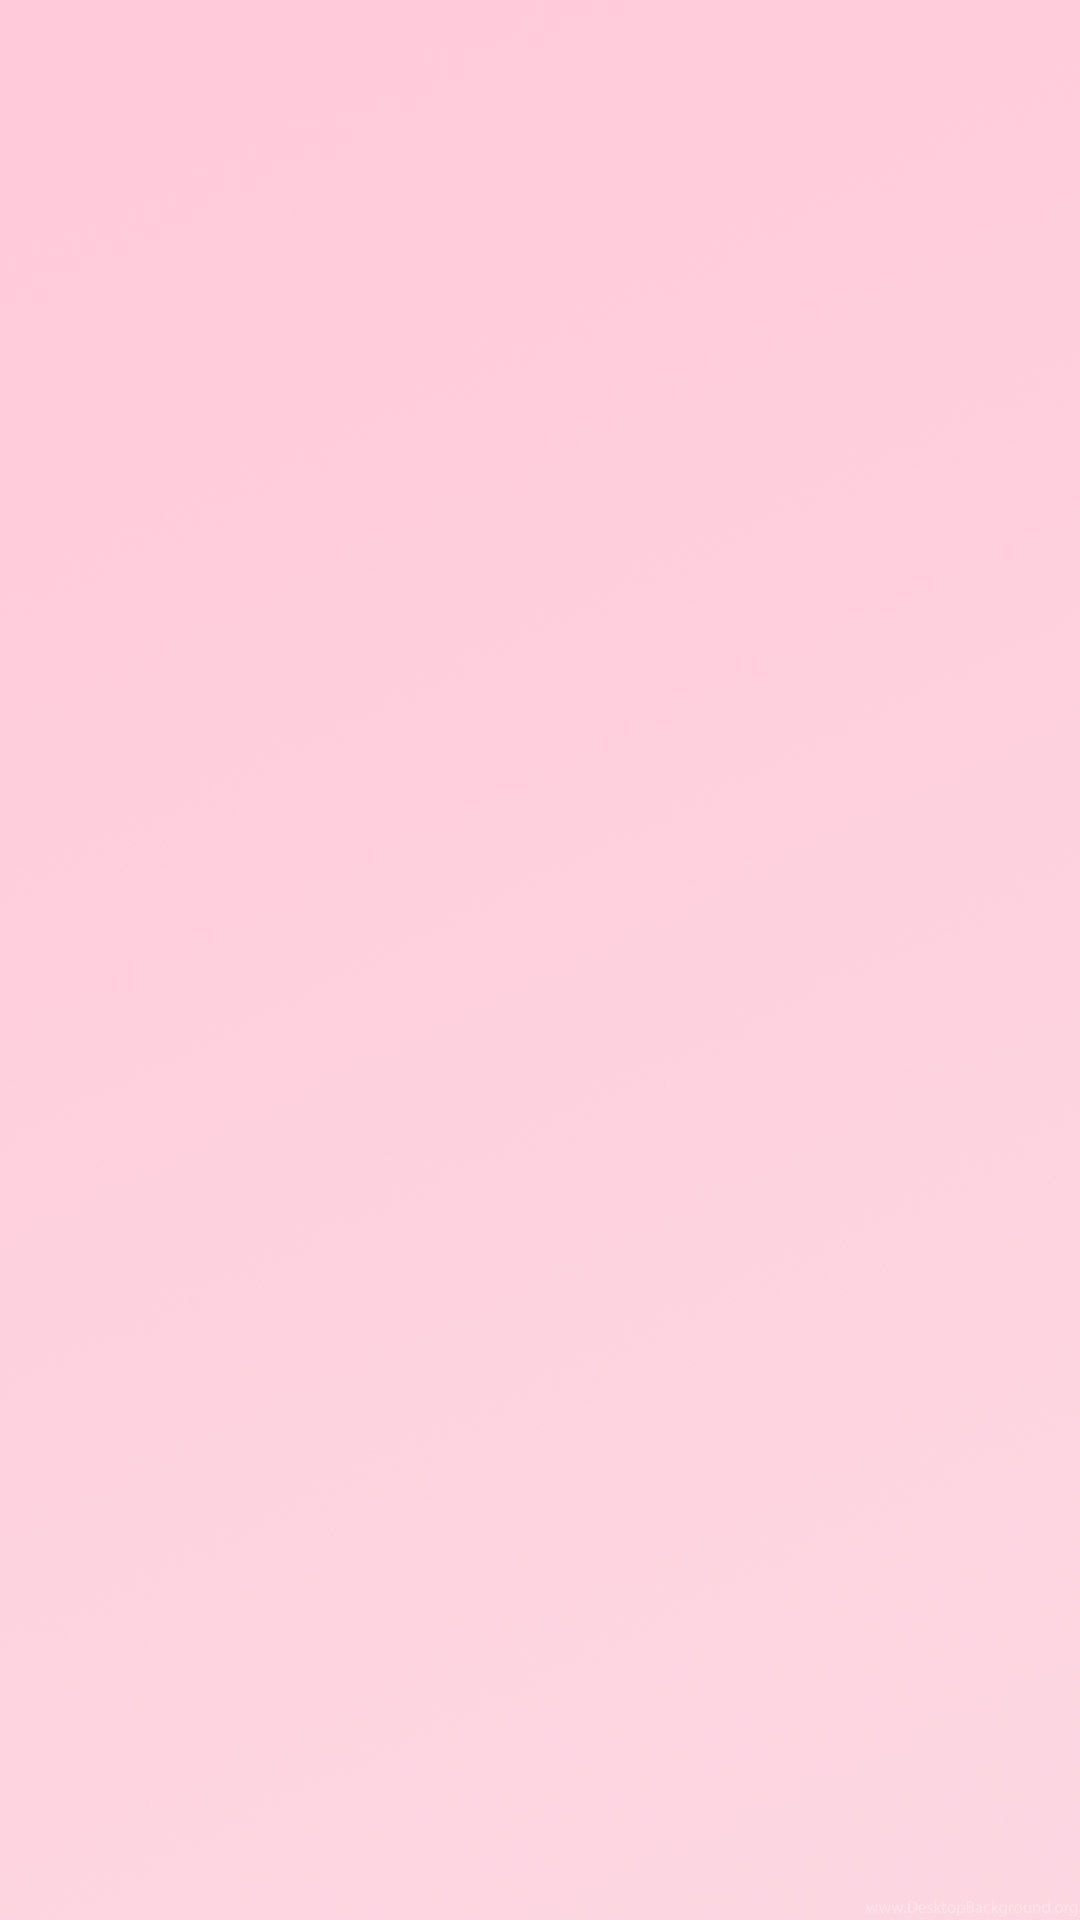 Plain Pink iPhone 5 6 Wallpaper / IPod Wallpaper Desktop Background